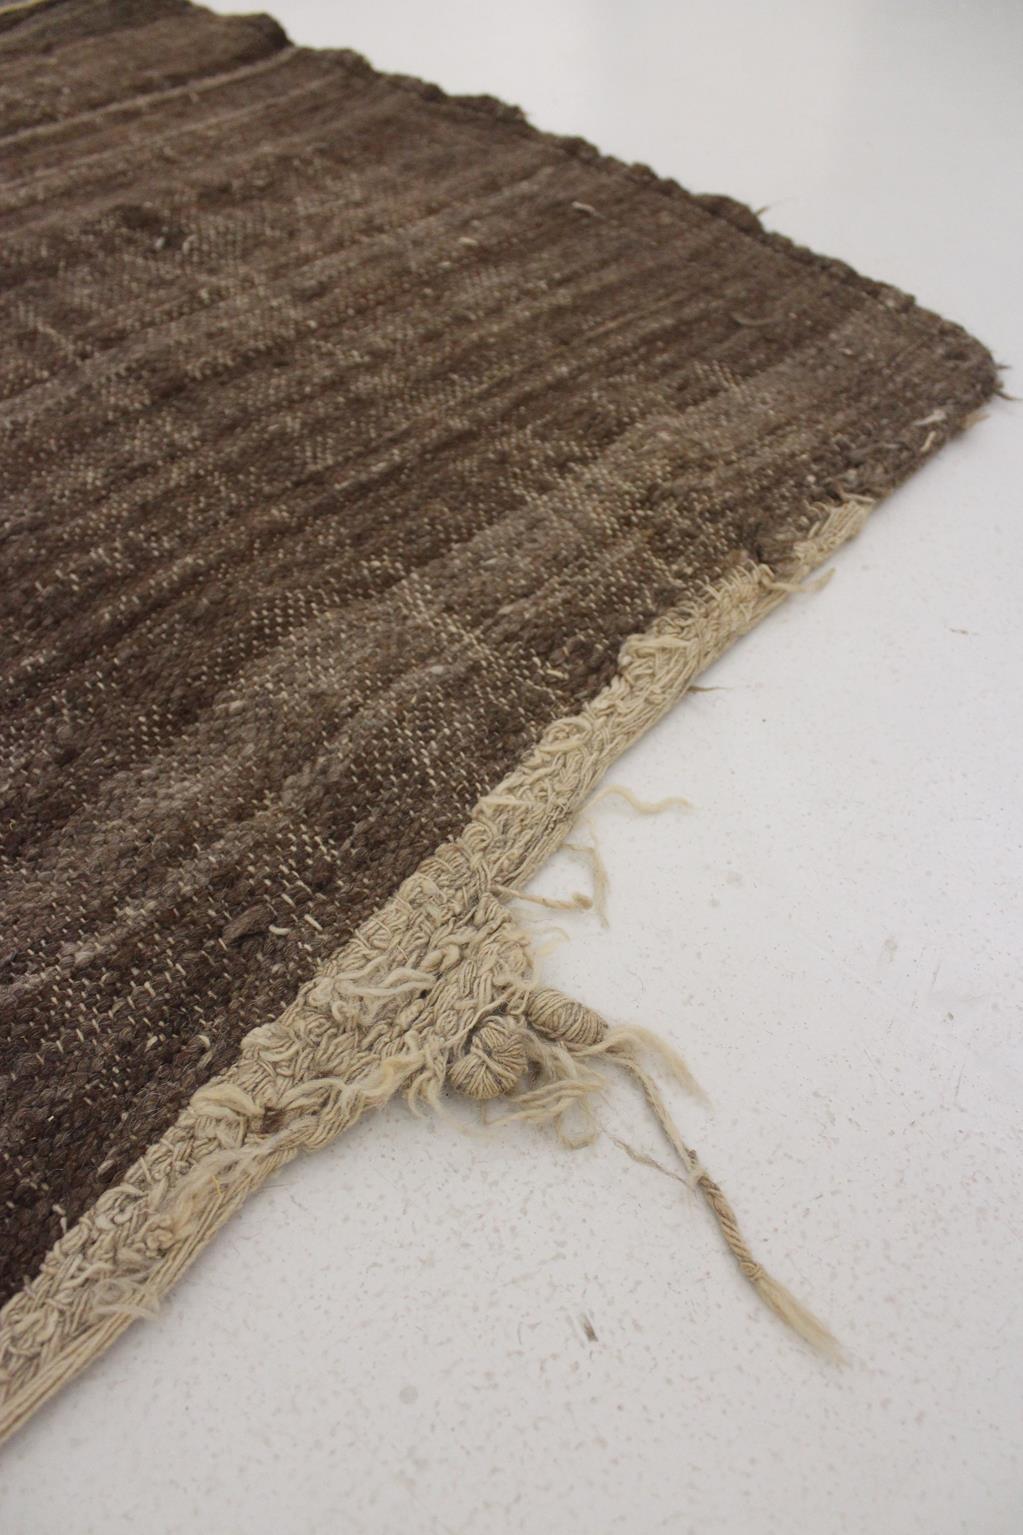 Vintage Moroccan Kilim rug - Stripes in beige+brown - 4.6x14.4feet / 142x440cm For Sale 6